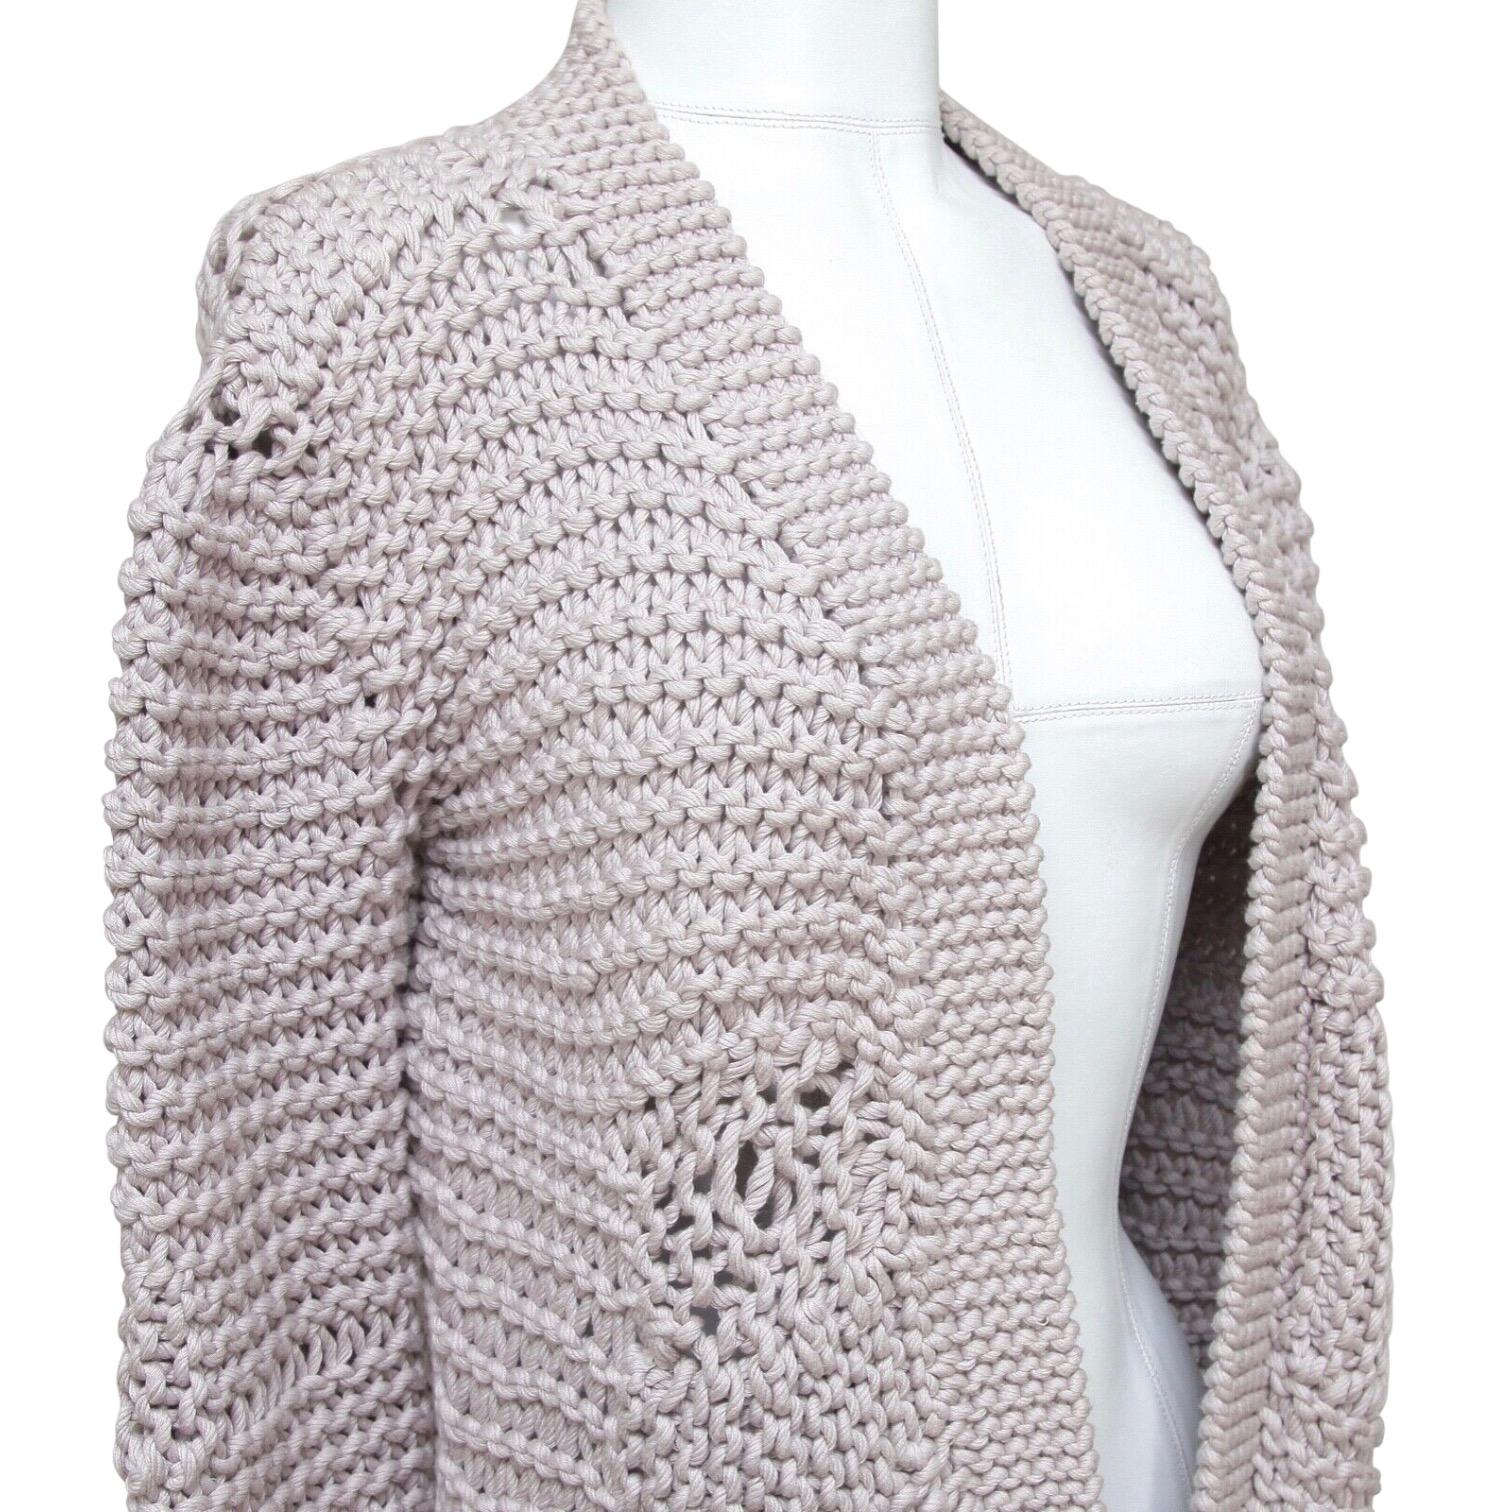 CHLOE Cardigan Sweater Knit Grey Lavender Open Front Long Sleeve Sz S 2008 For Sale 1